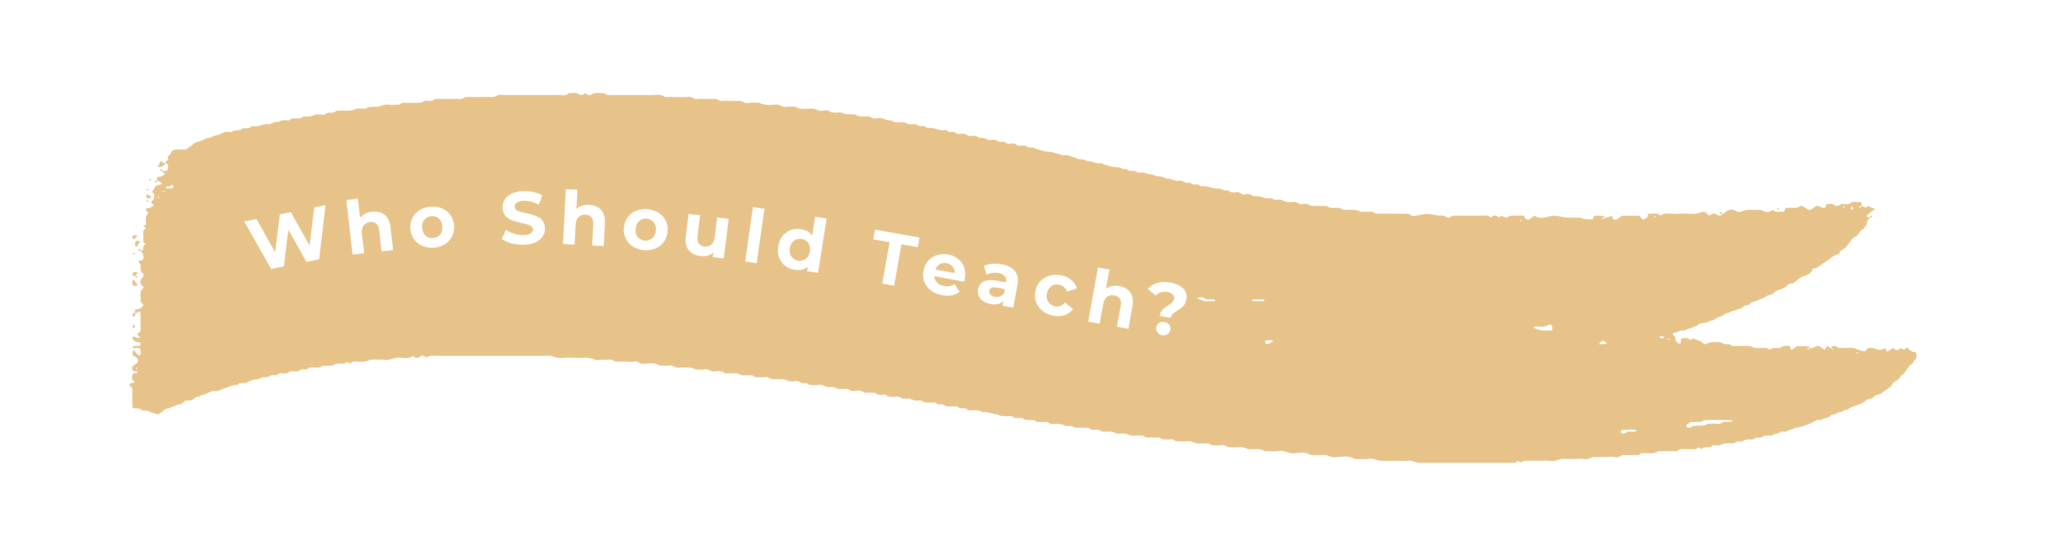 Who should teach